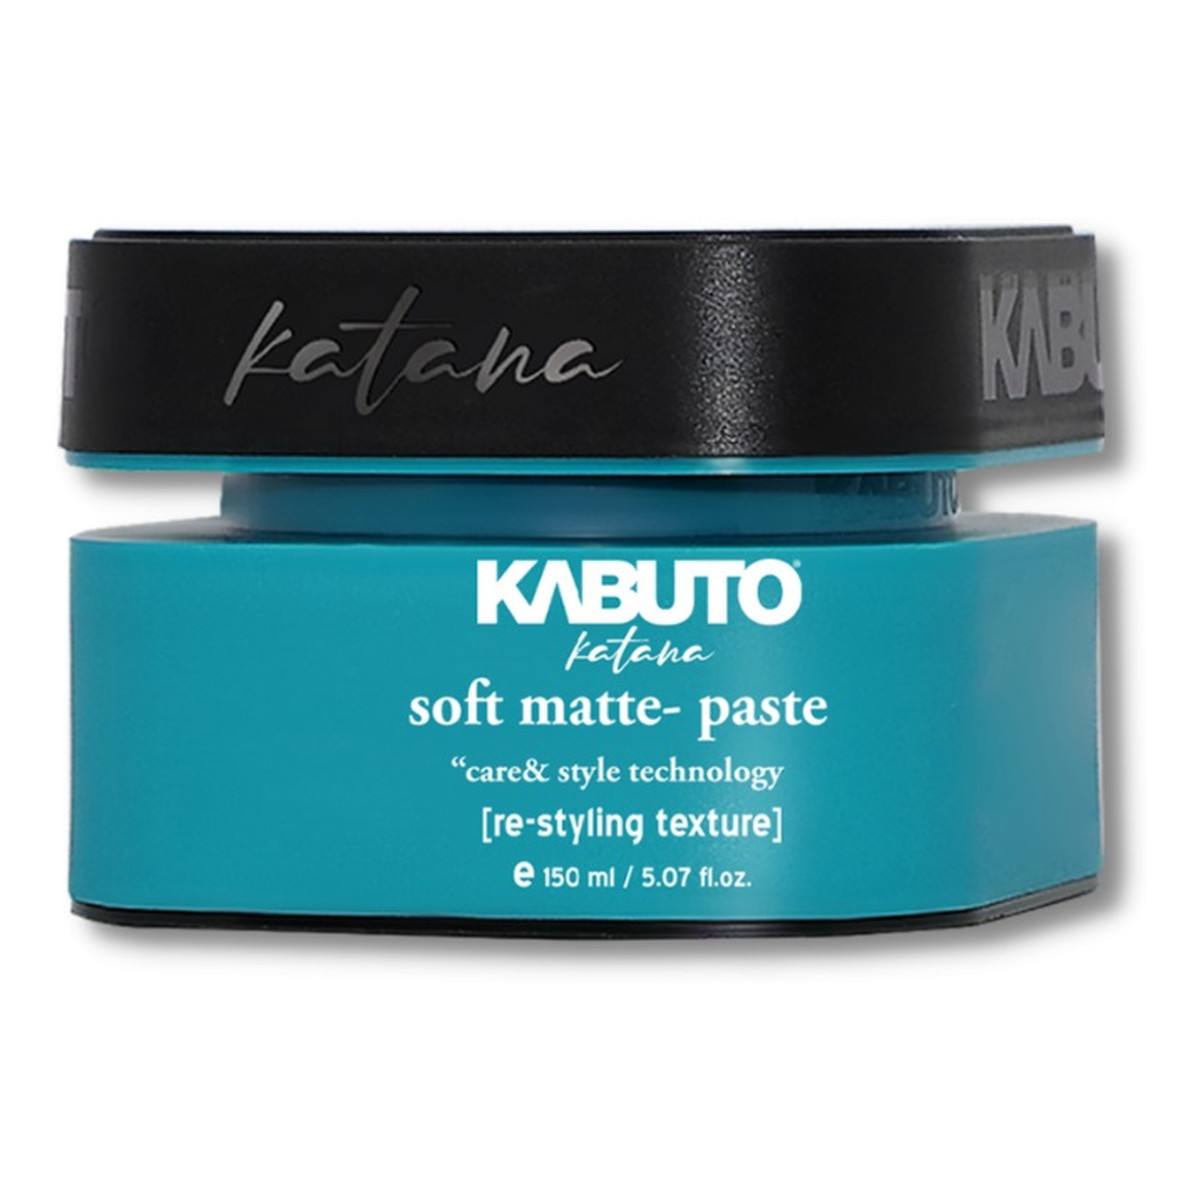 Kabuto Katana Soft matte paste pasta matująca do włosów 150ml